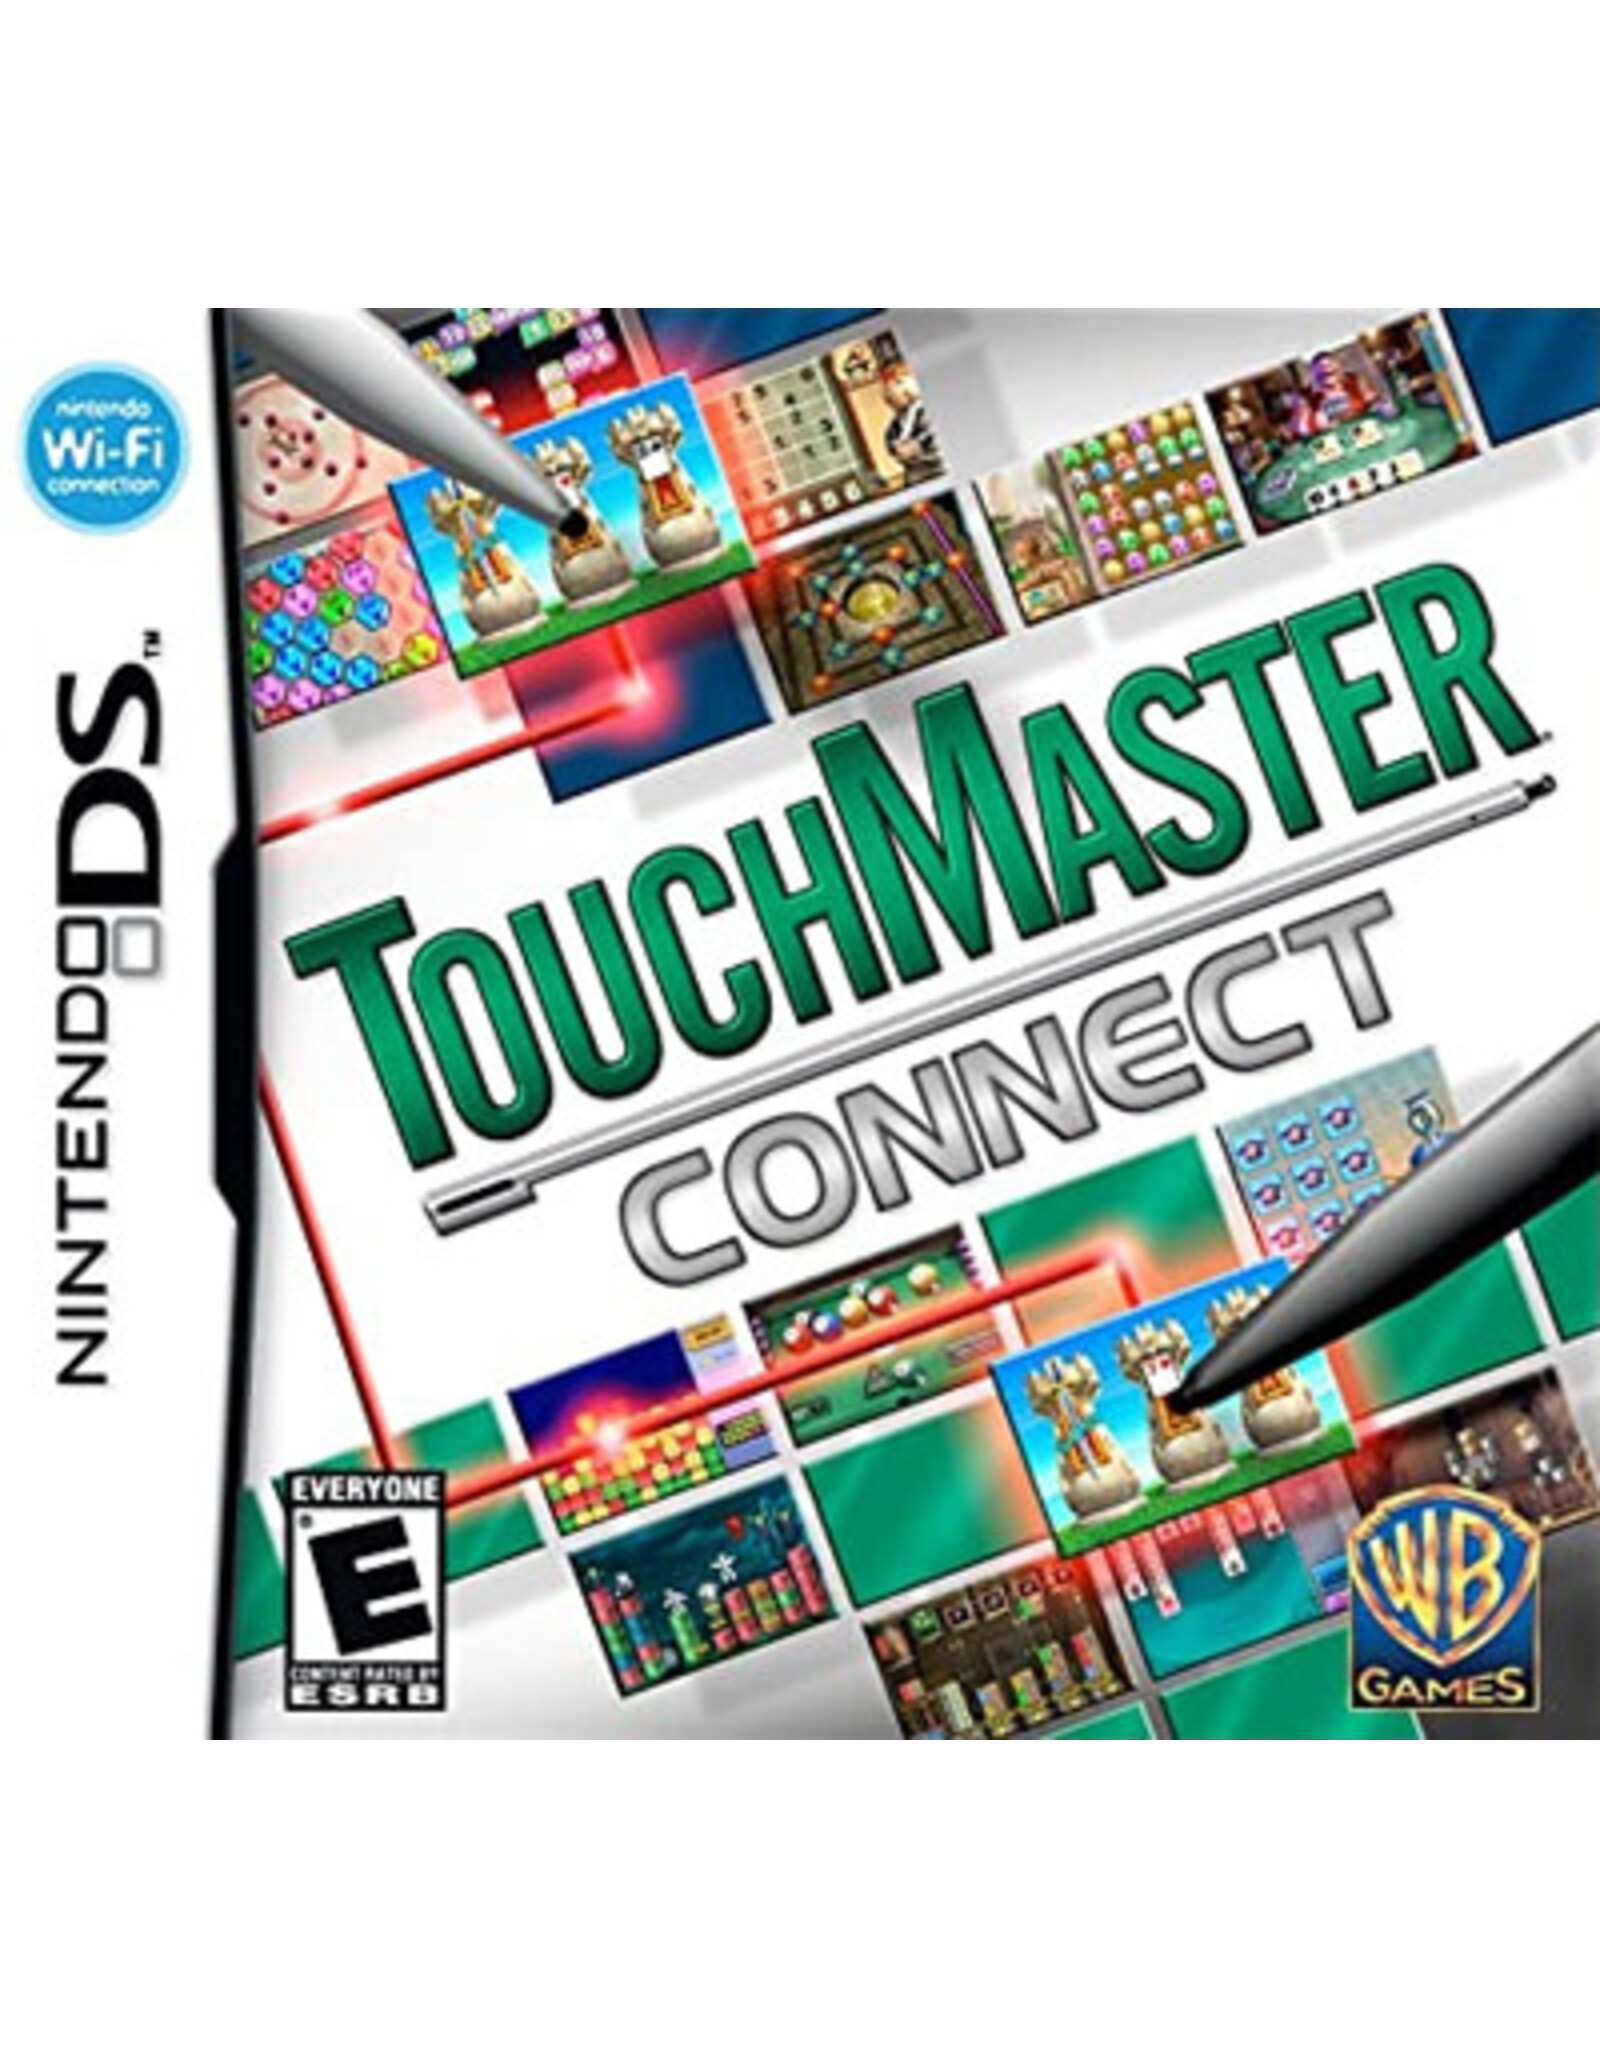 Nintendo DS TouchMaster: Connect (CiB)